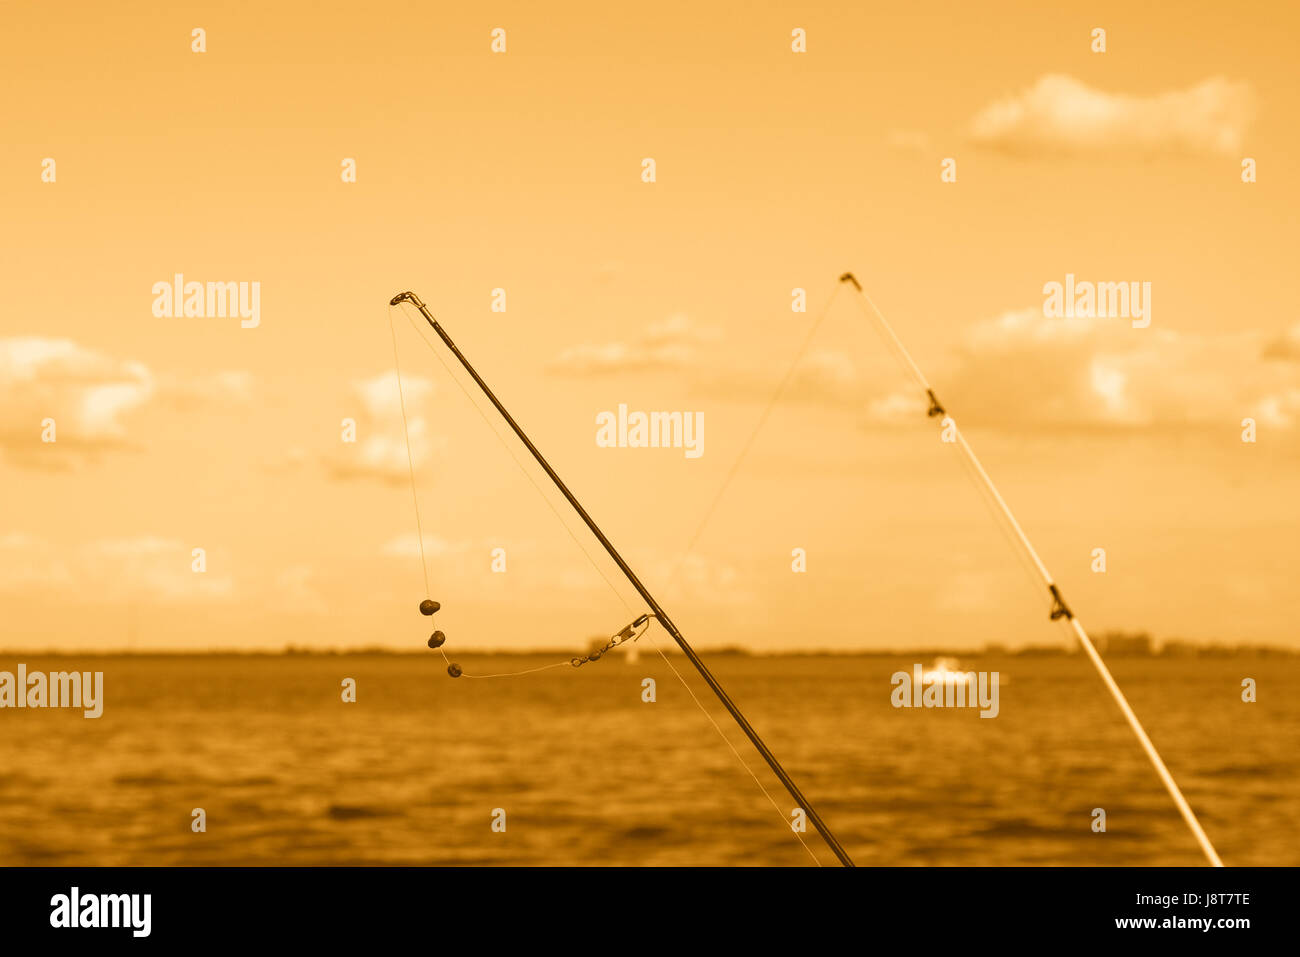 https://c8.alamy.com/comp/J8T7TE/hobby-fishing-rods-horizon-horizontal-boat-clouds-weights-salt-water-J8T7TE.jpg